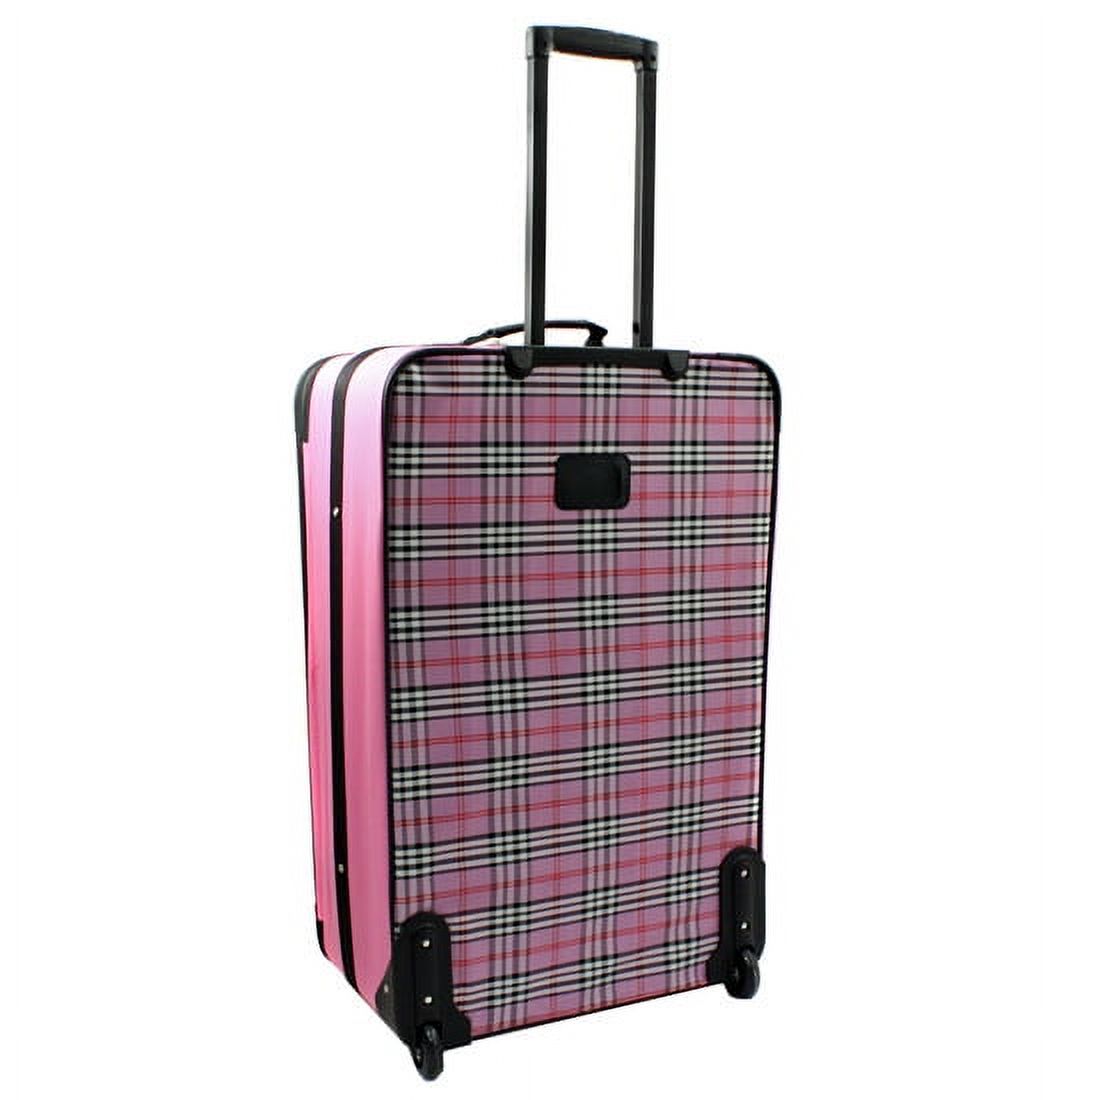 Rockland Luggage Fashion Collection 4 Piece Softside Expandable Luggage Set - image 4 of 5